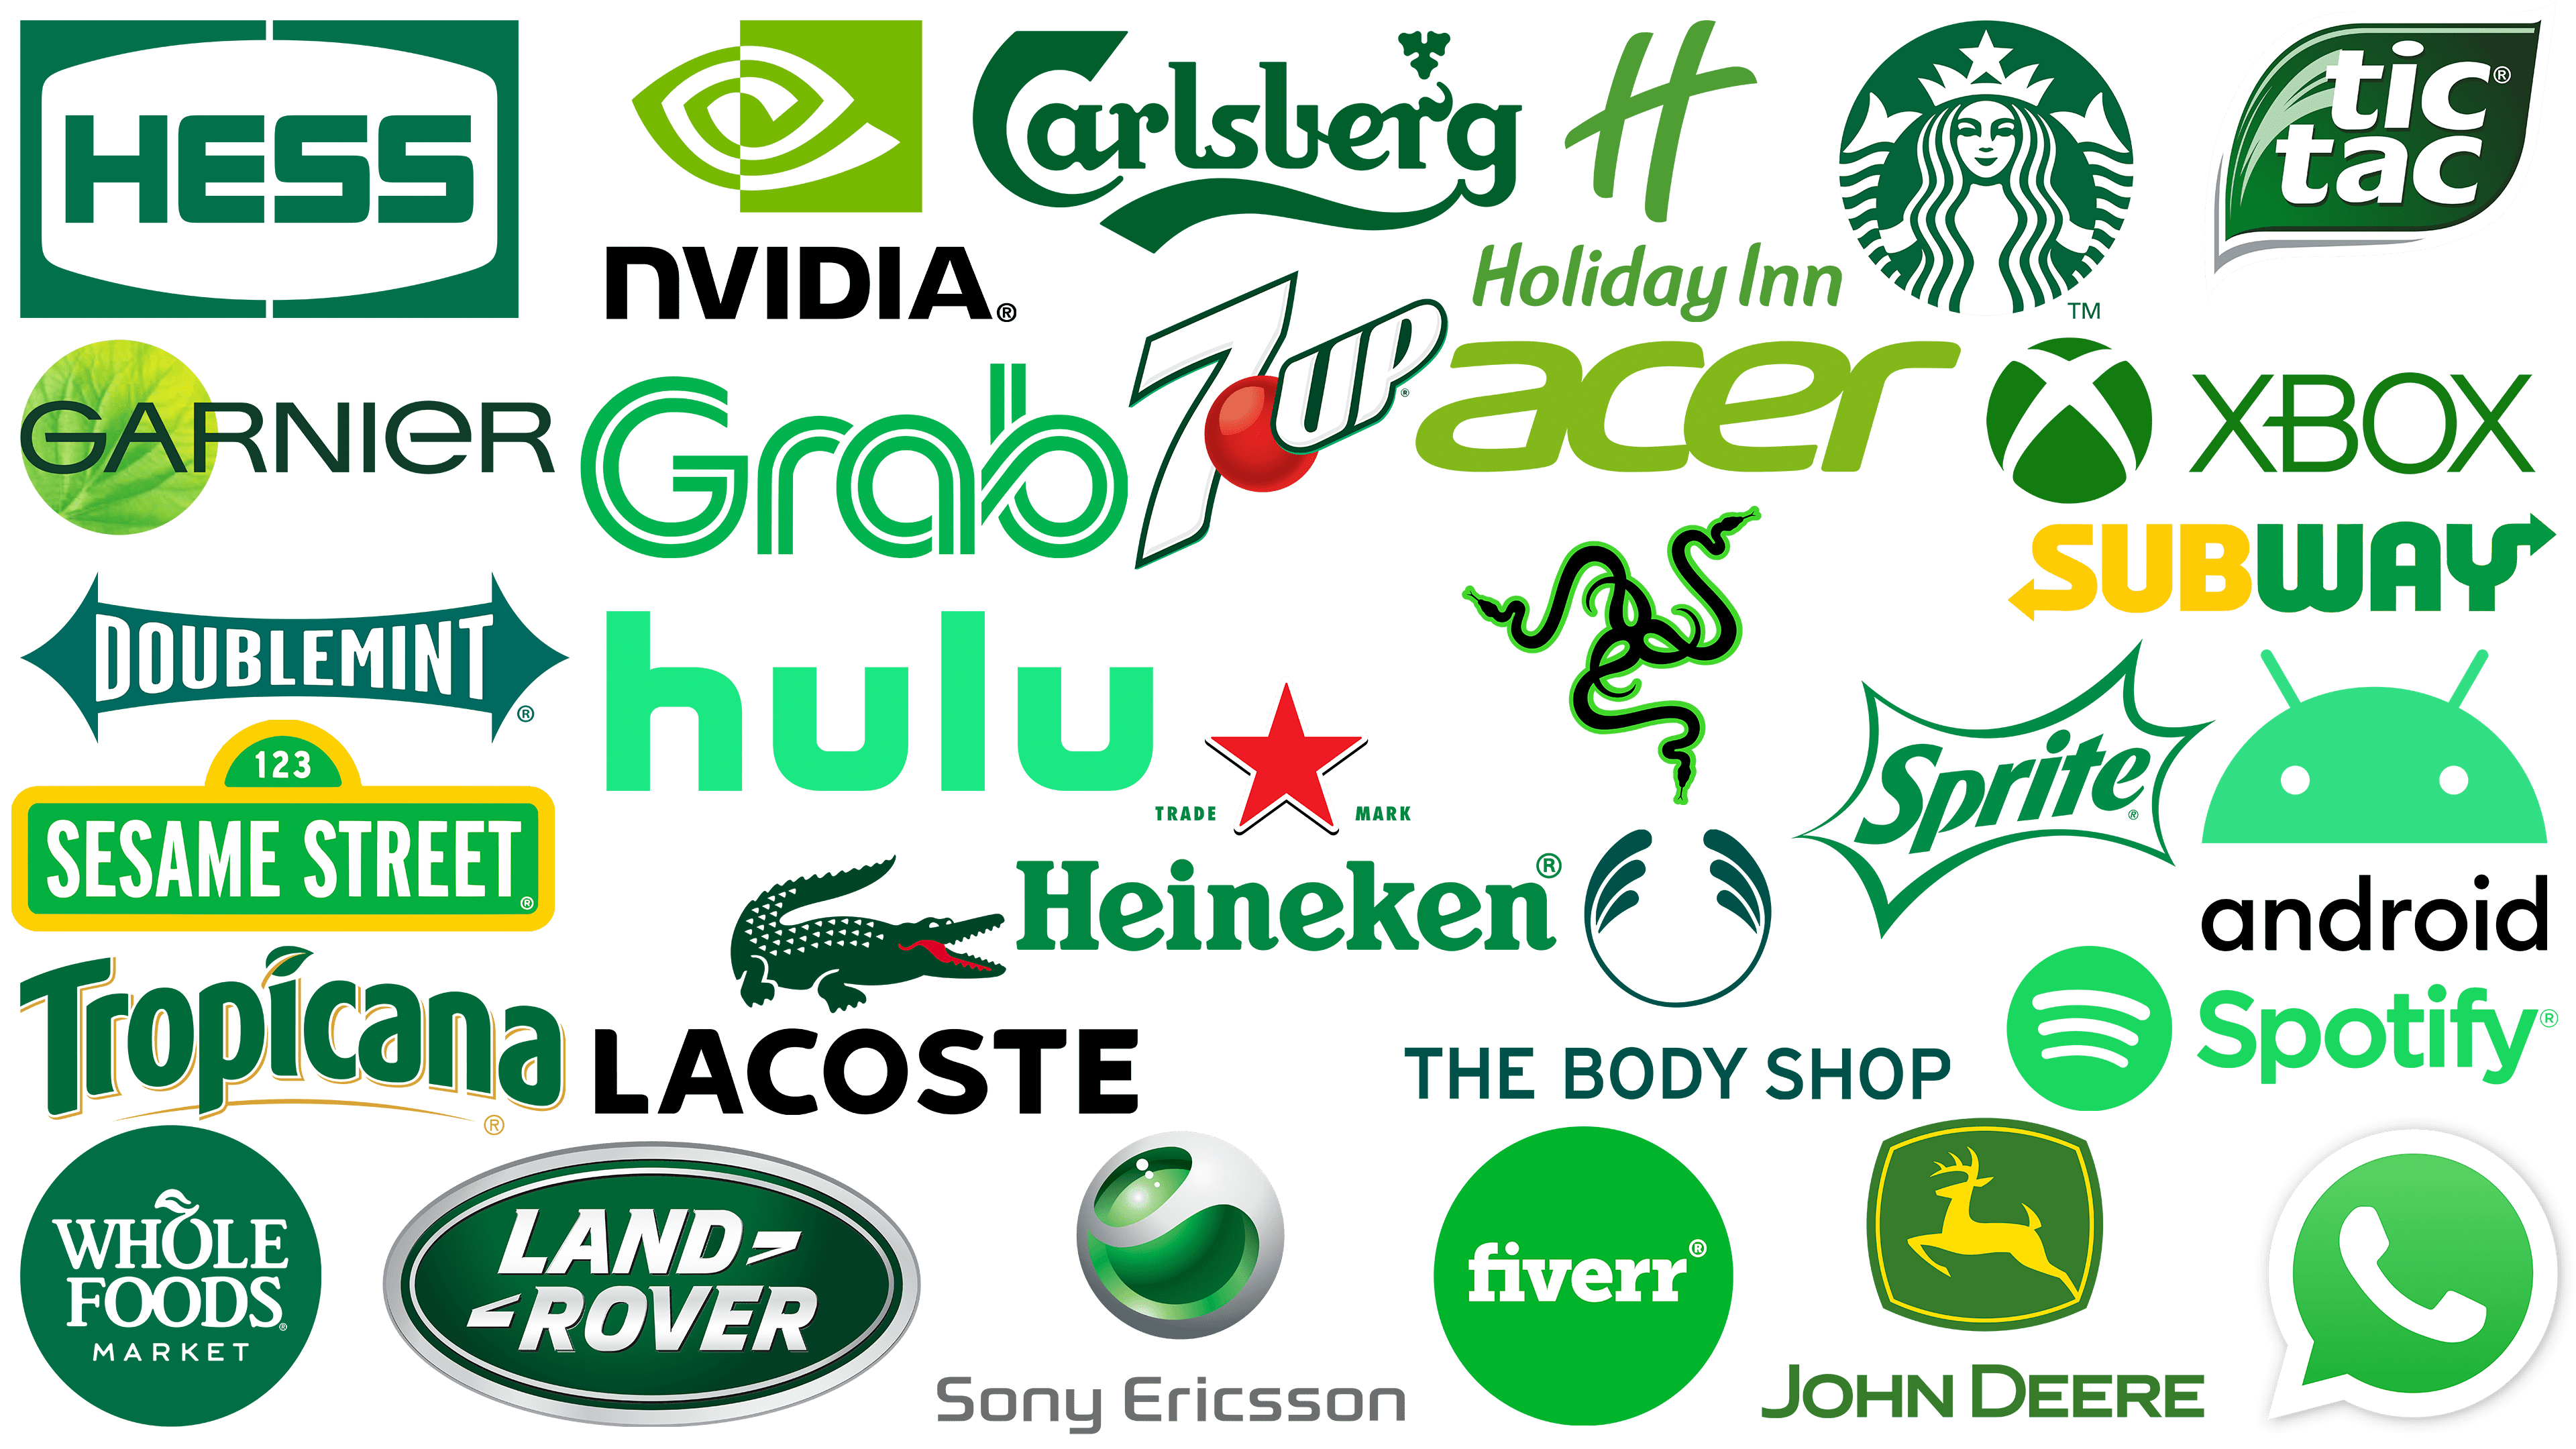 Green Brand Logos